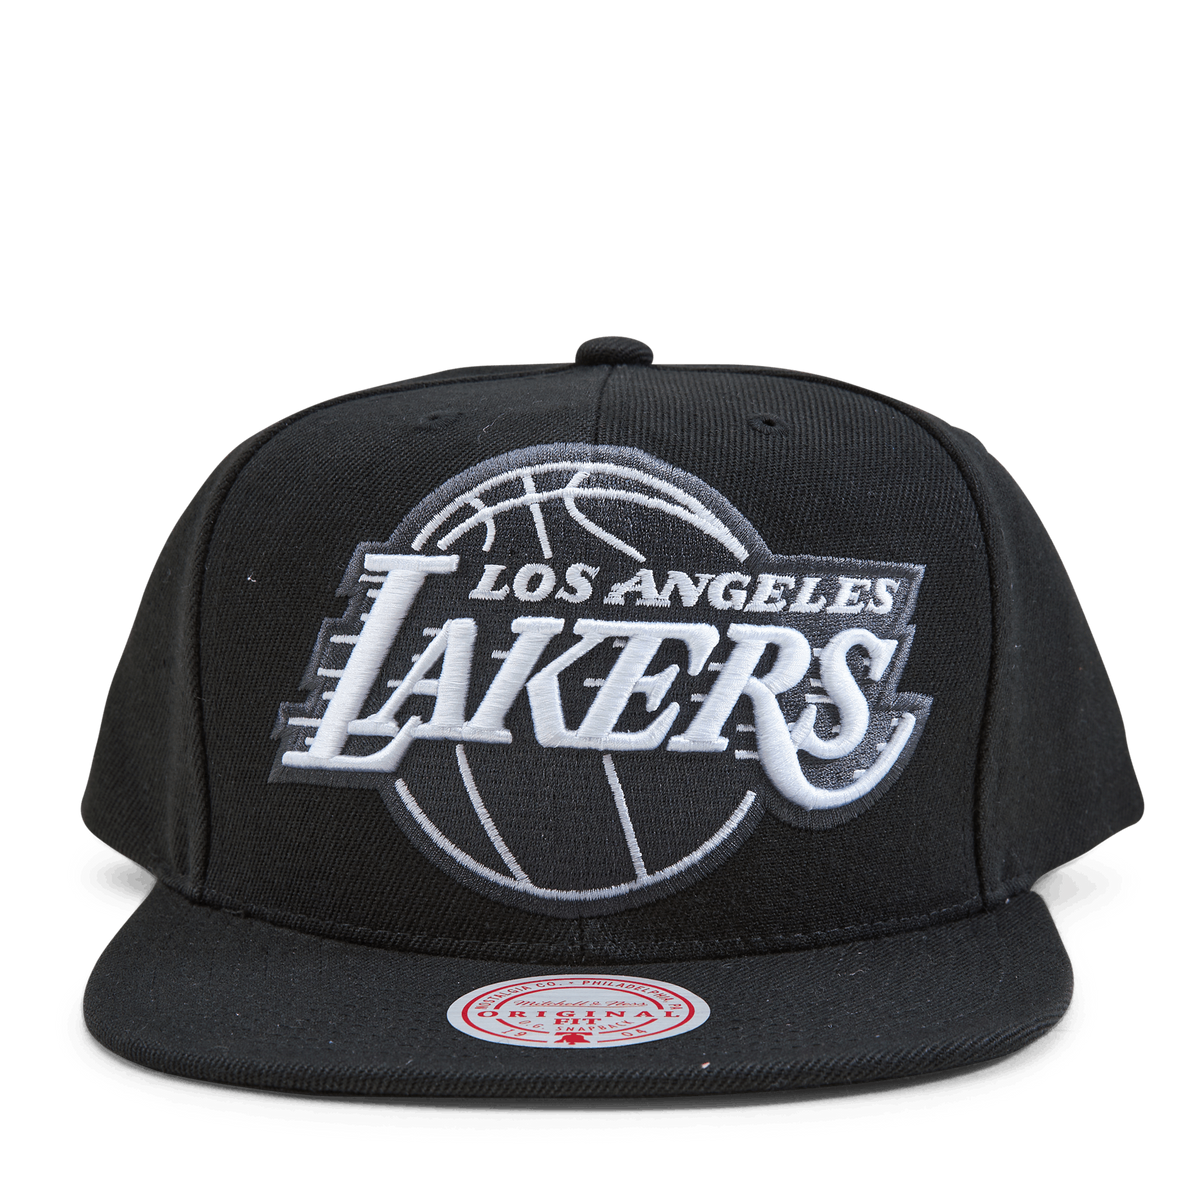 Lakers NBA Xl Bwg Snapback